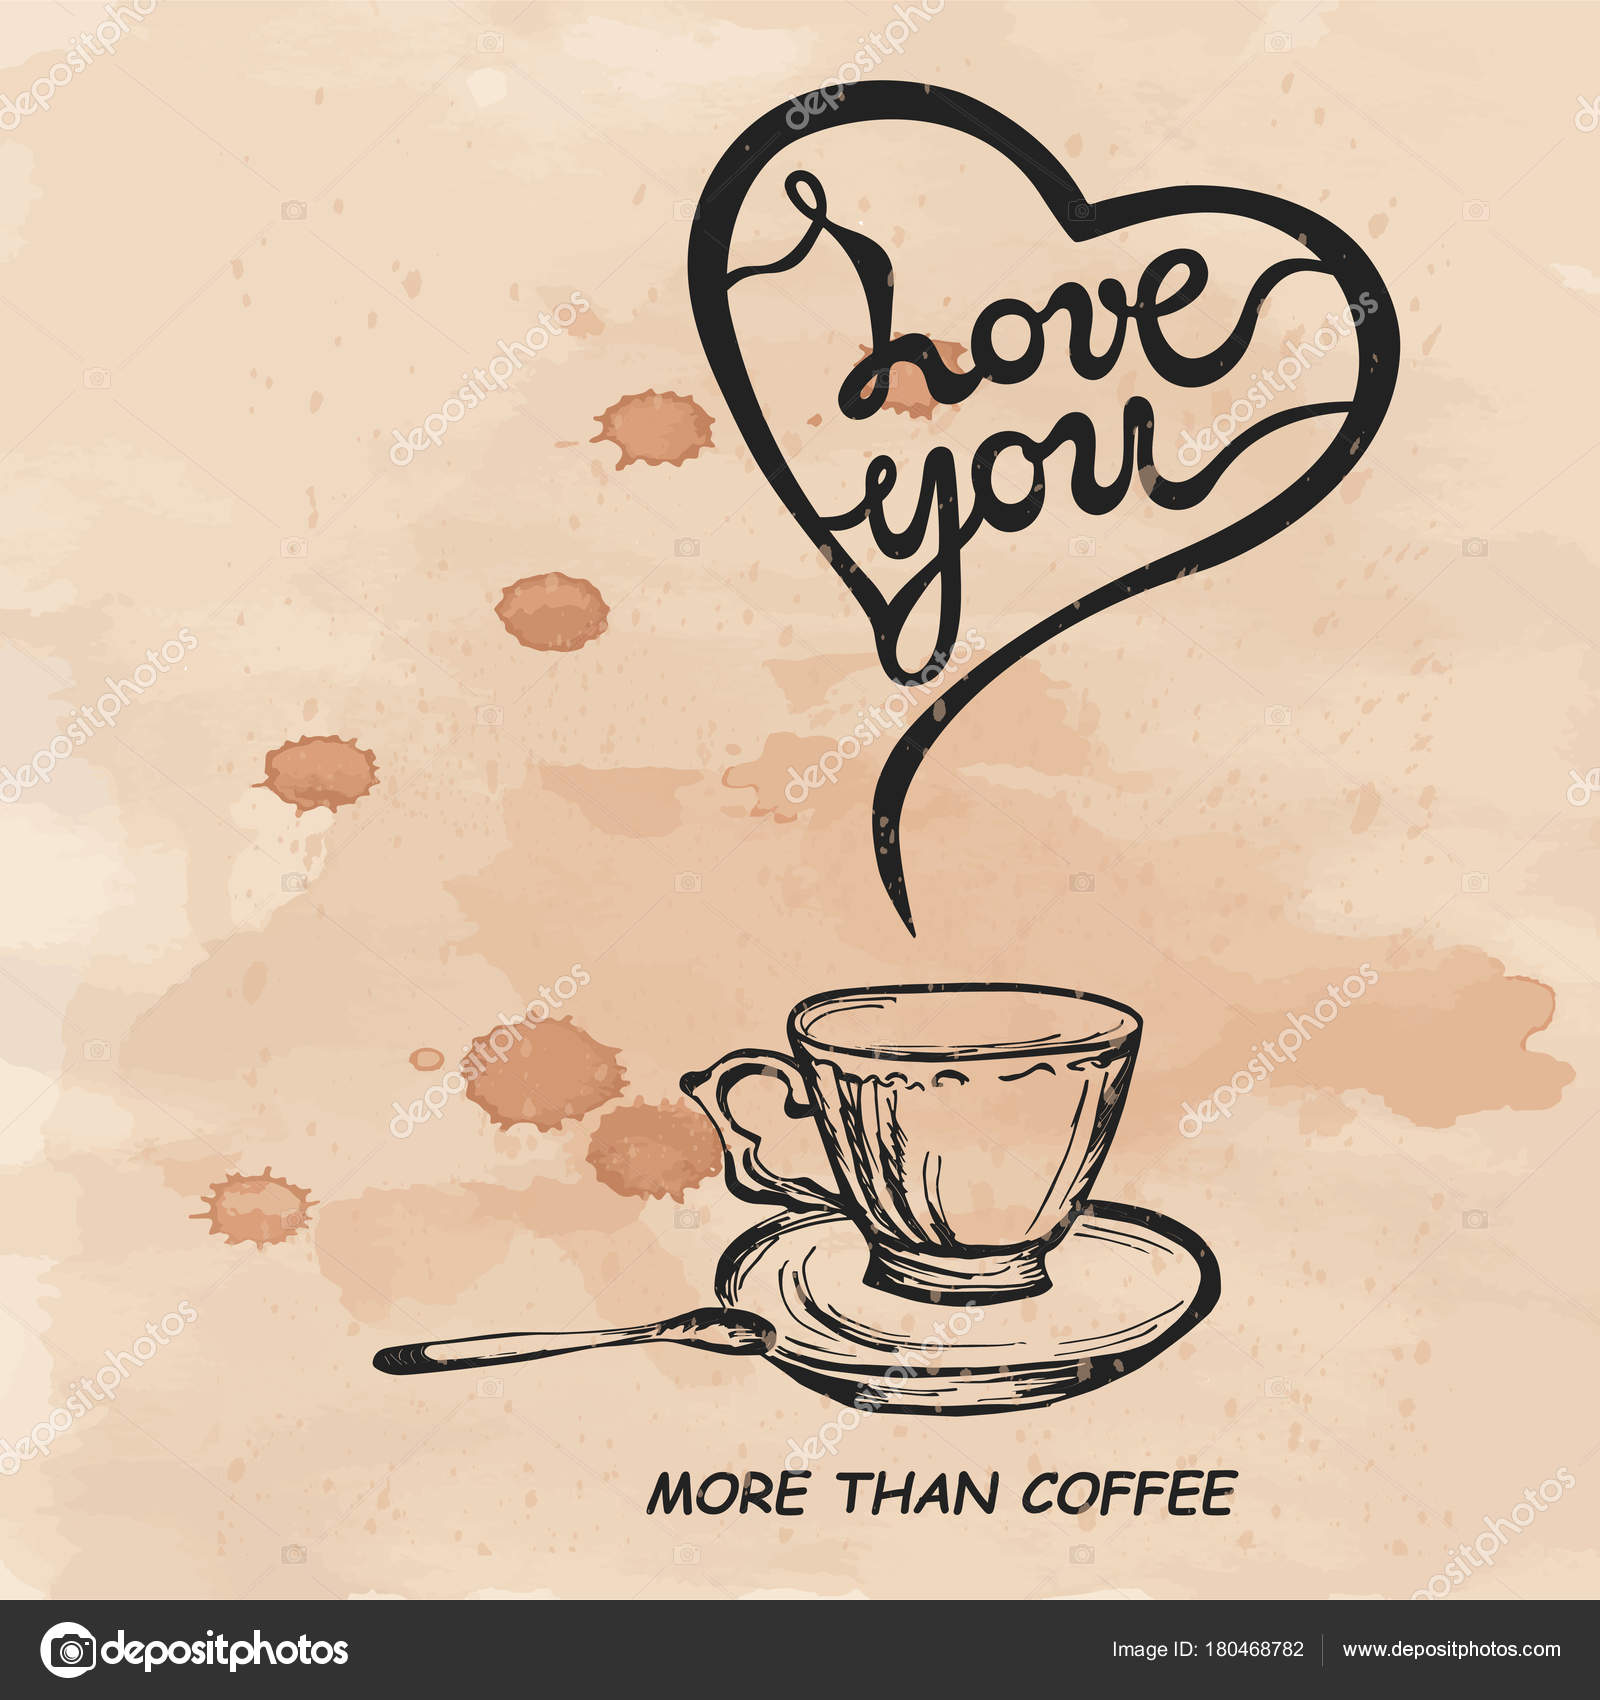 https://st3.depositphotos.com/7555982/18046/v/1600/depositphotos_180468782-stock-illustration-love-you-more-coffee-text.jpg